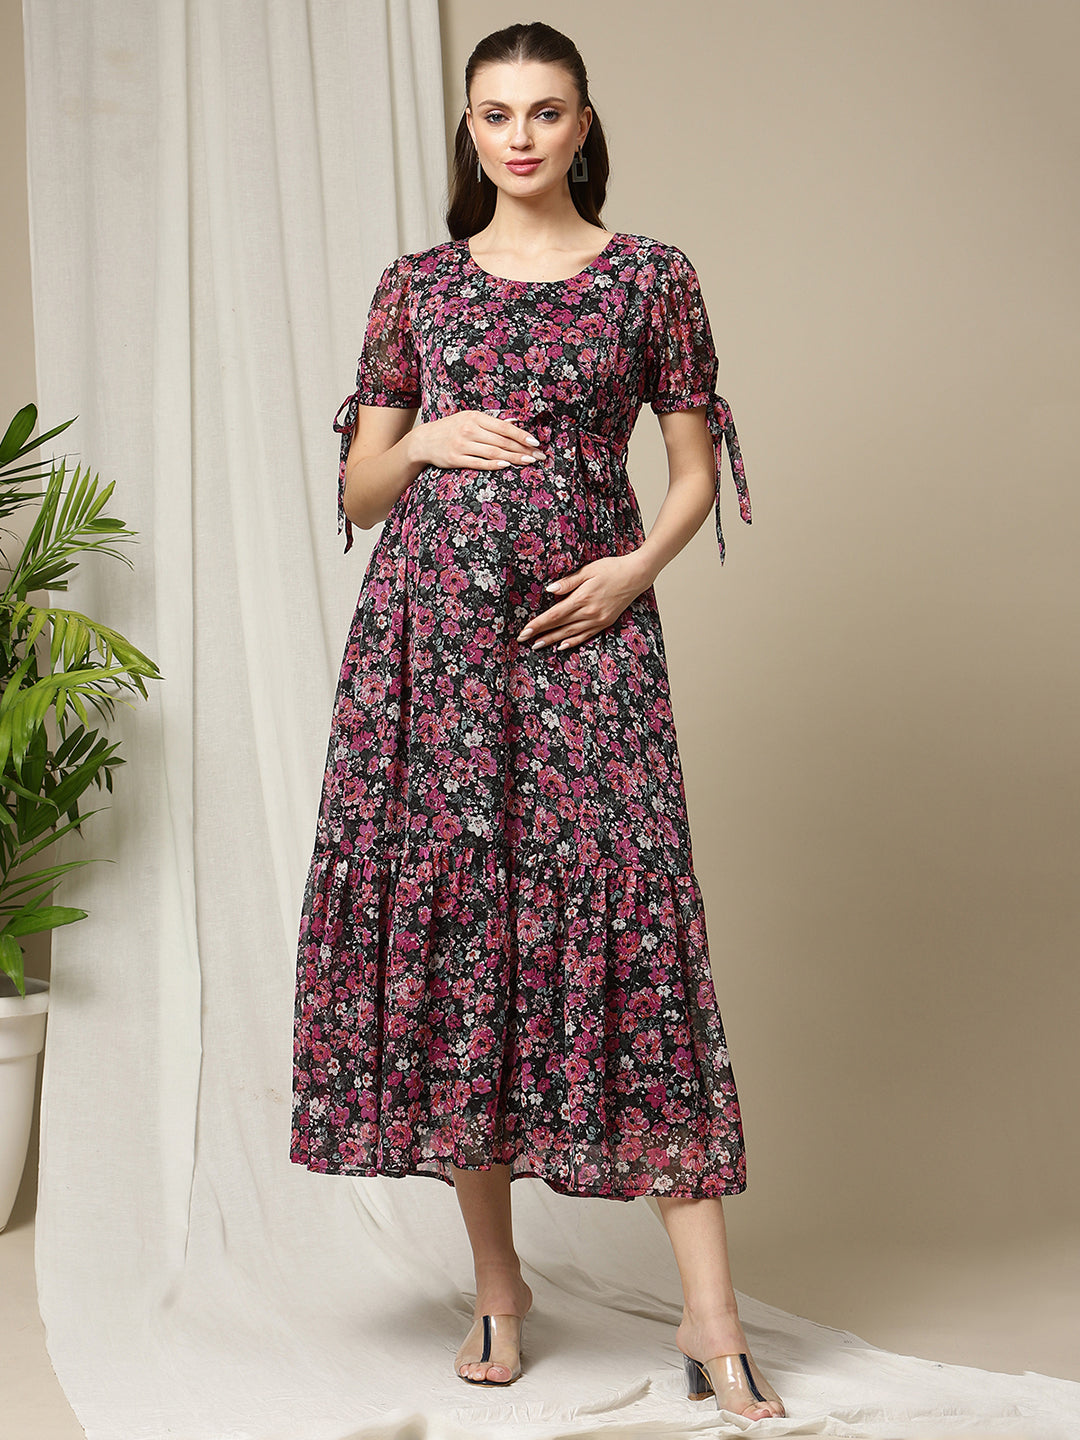 Vetement Femme Women Pregnants Maternity Dress Photography Props Ruffles  Off Shoulder Maternity Solid Dress For Photo Shoot - Dresses - AliExpress